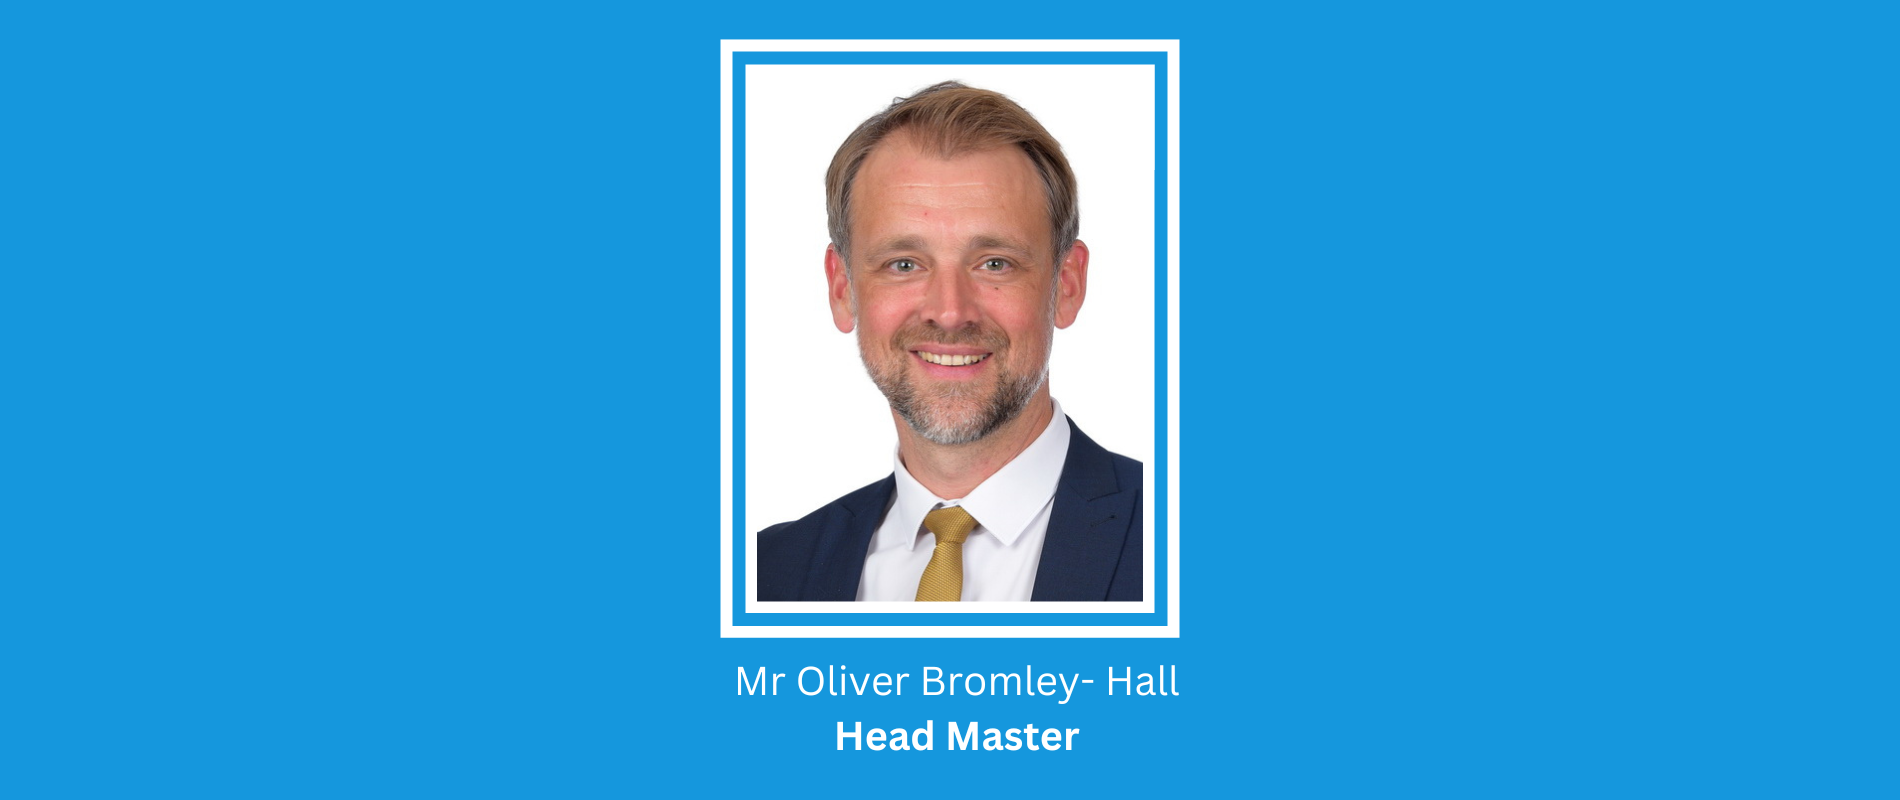 Mr Oliver Bromley- Hall Head Master.png